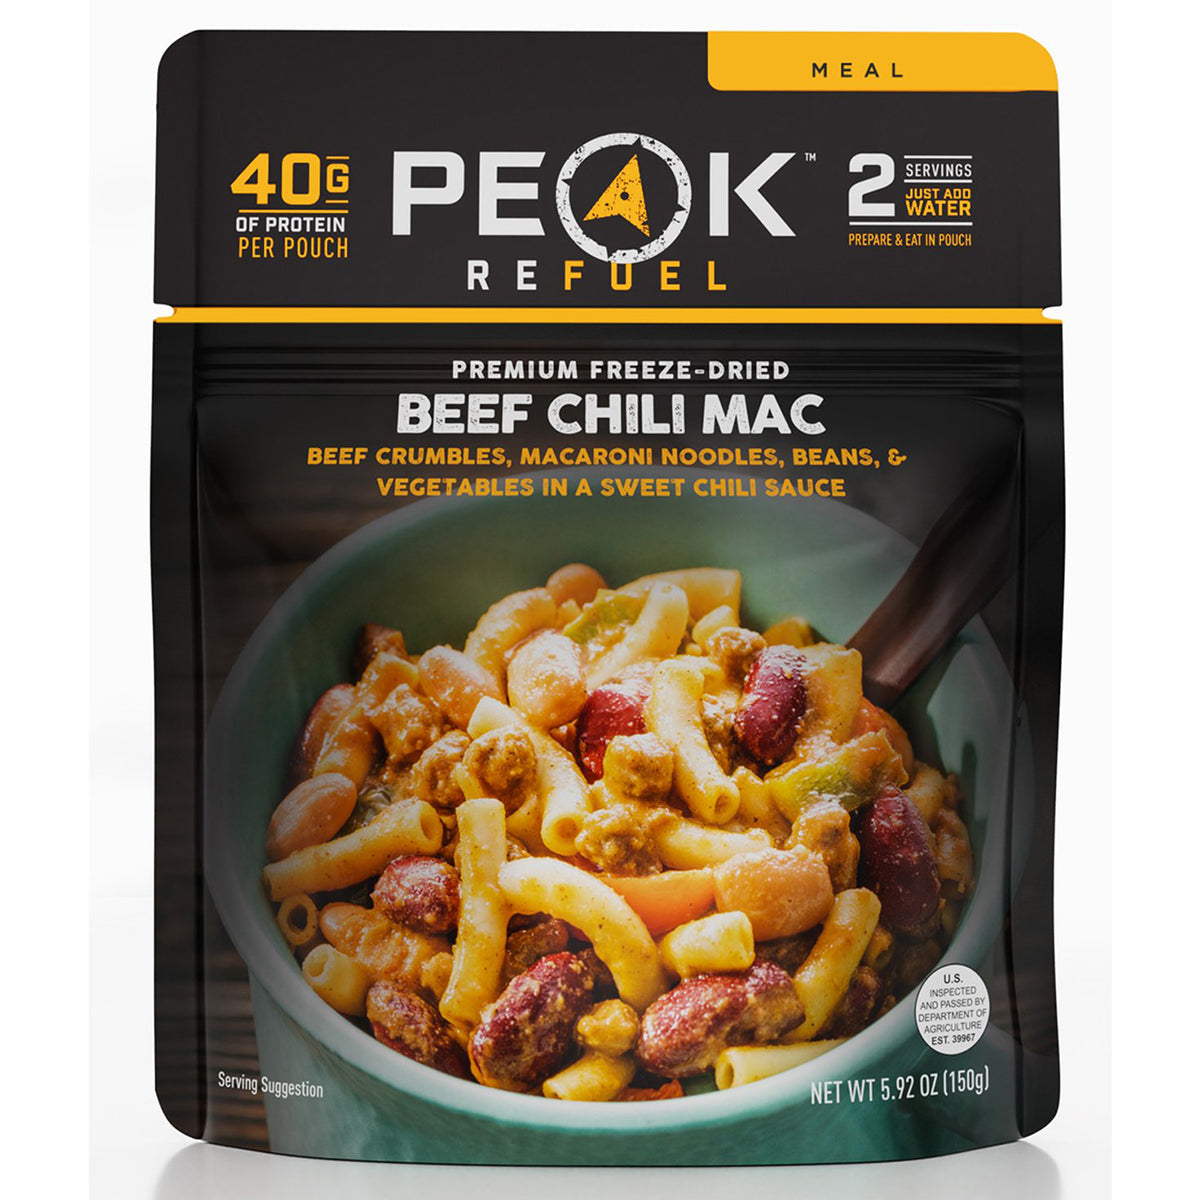 Peak Refuel Beef Chili Mac by Peak Refuel | Camping - goHUNT Shop